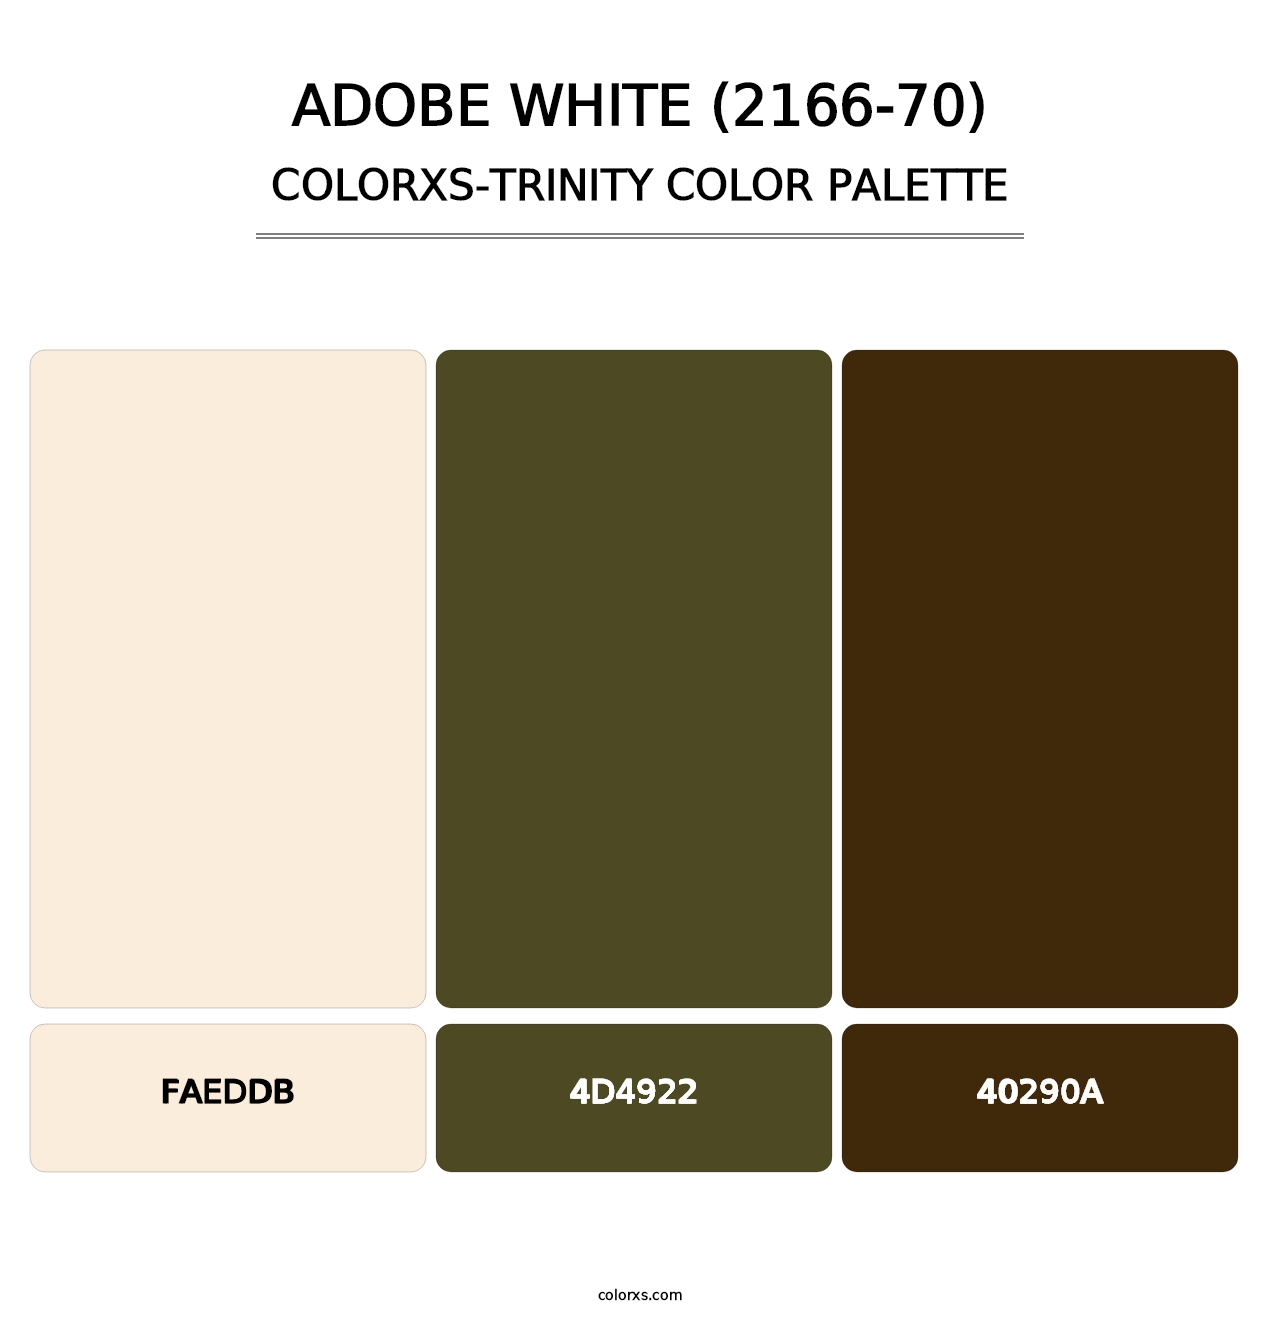 Adobe White (2166-70) - Colorxs Trinity Palette